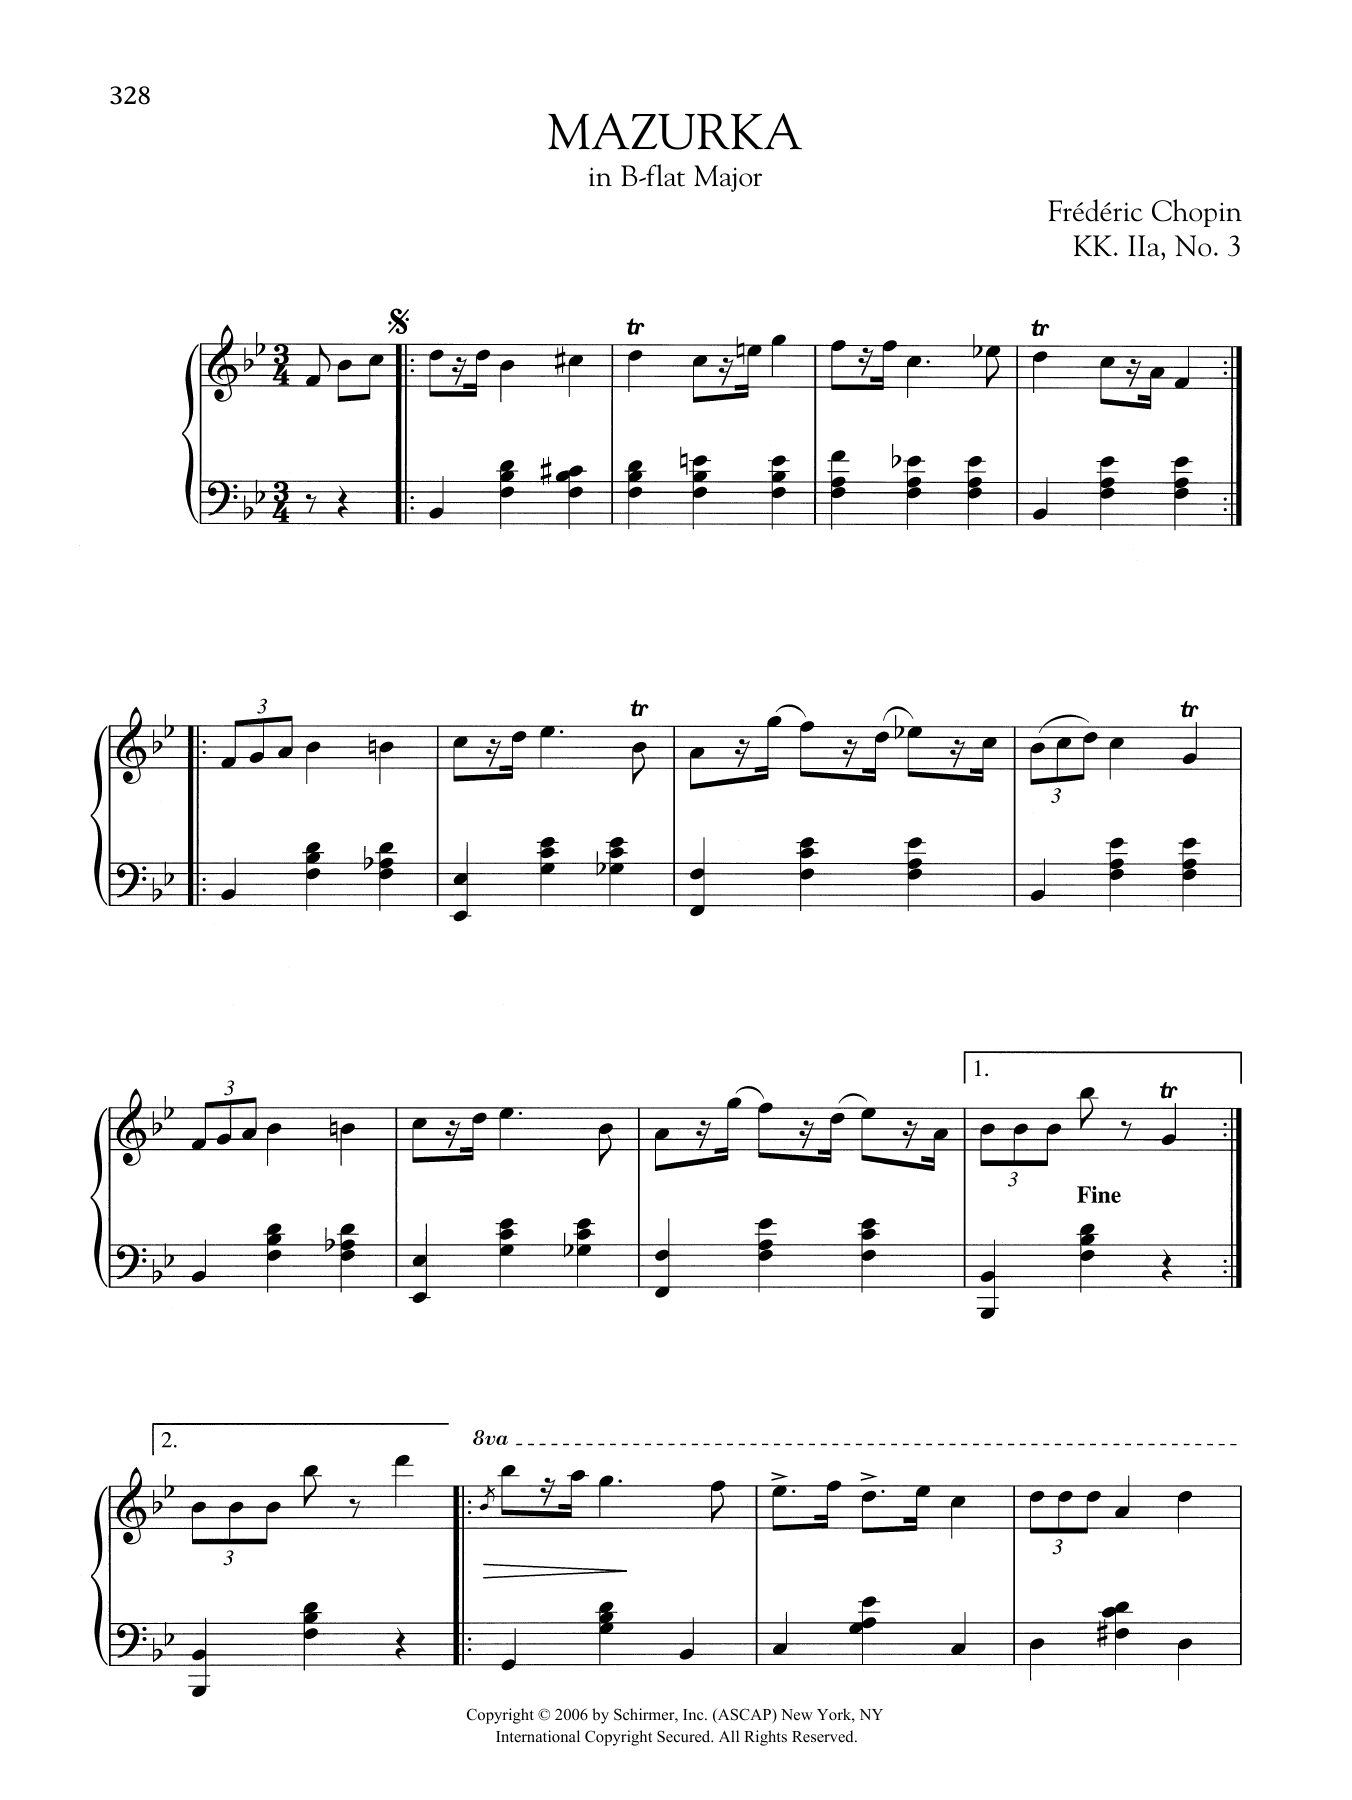 Download Frederic Chopin Mazurka in B-flat Major, KK. IIa, No. 3 Sheet Music